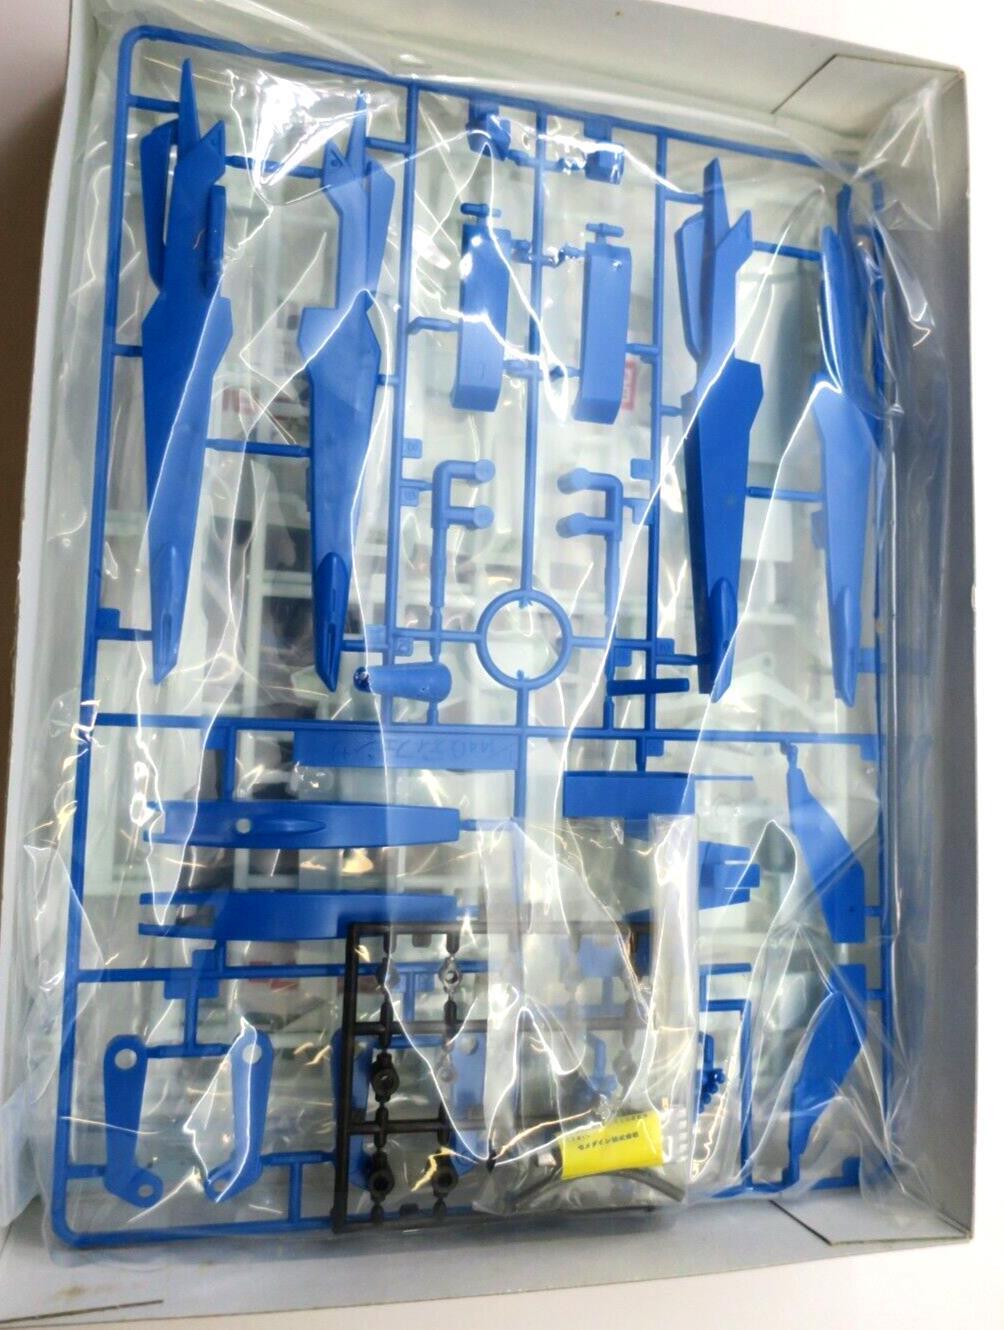 Vintage Bandai Zeta Gundam 1/144 G-Defenser 004972-700 Model Kit